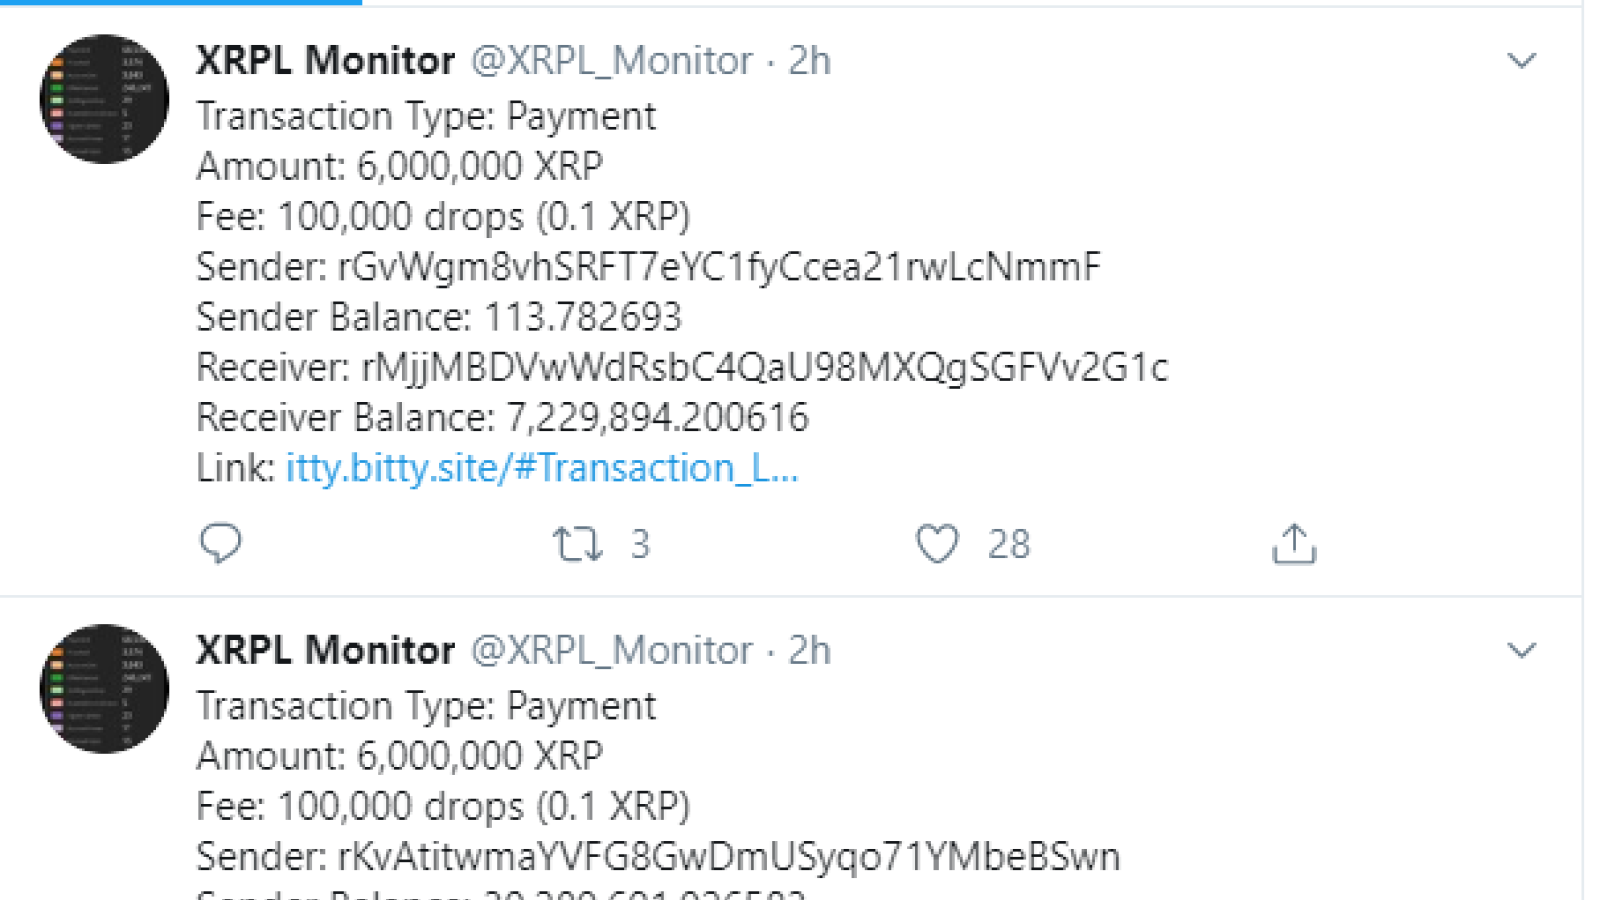 XRPL Monitor